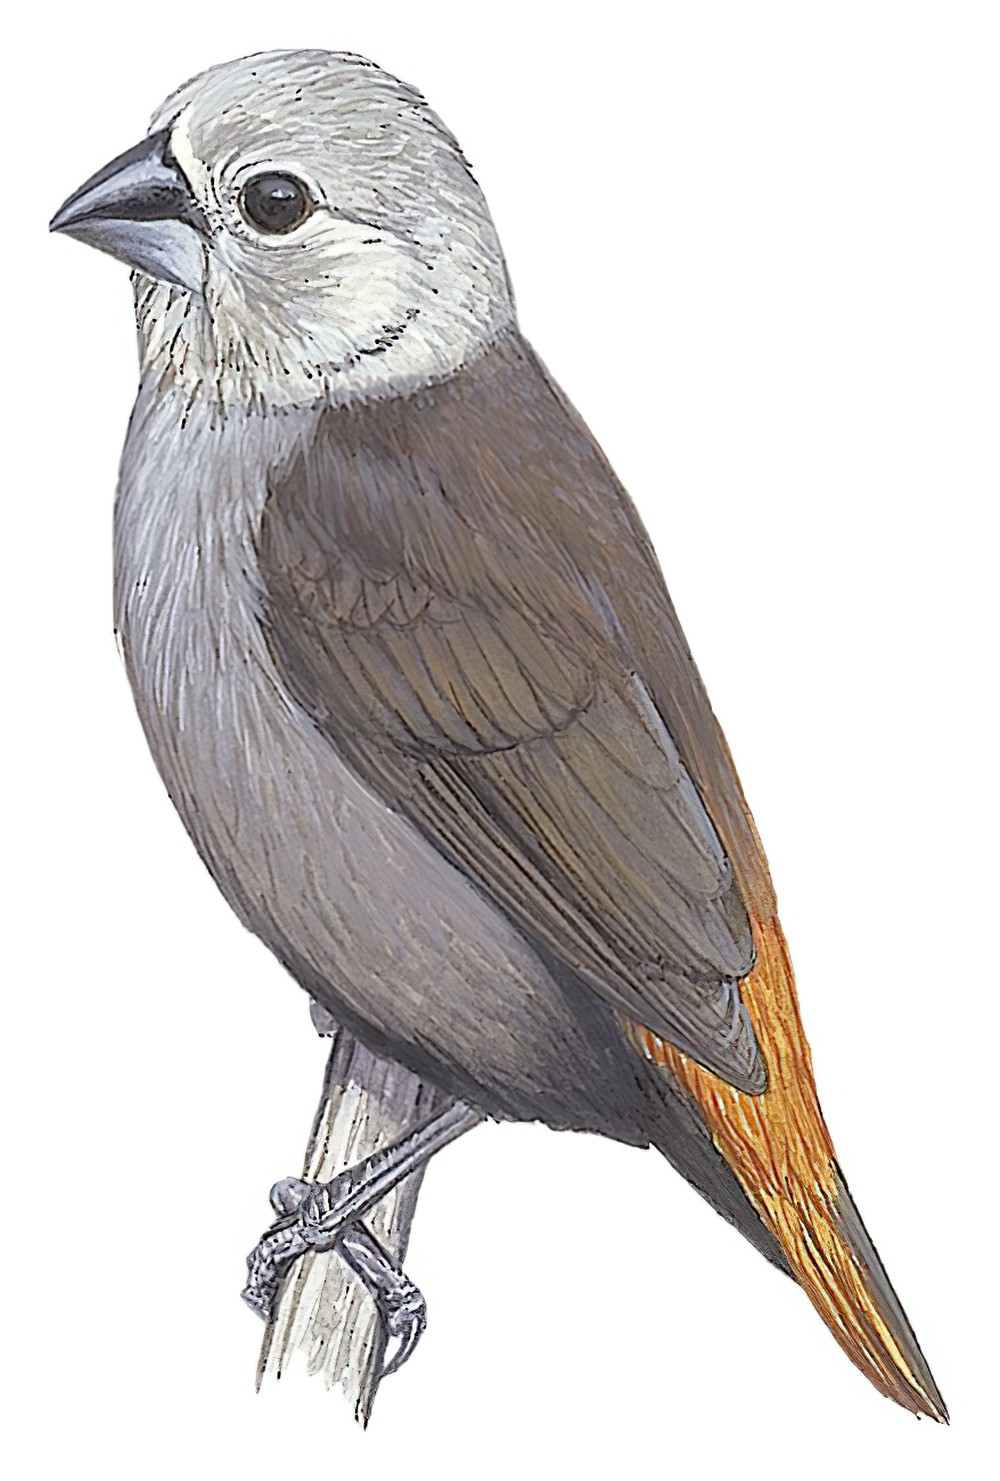 Gray-headed Munia / Lonchura caniceps